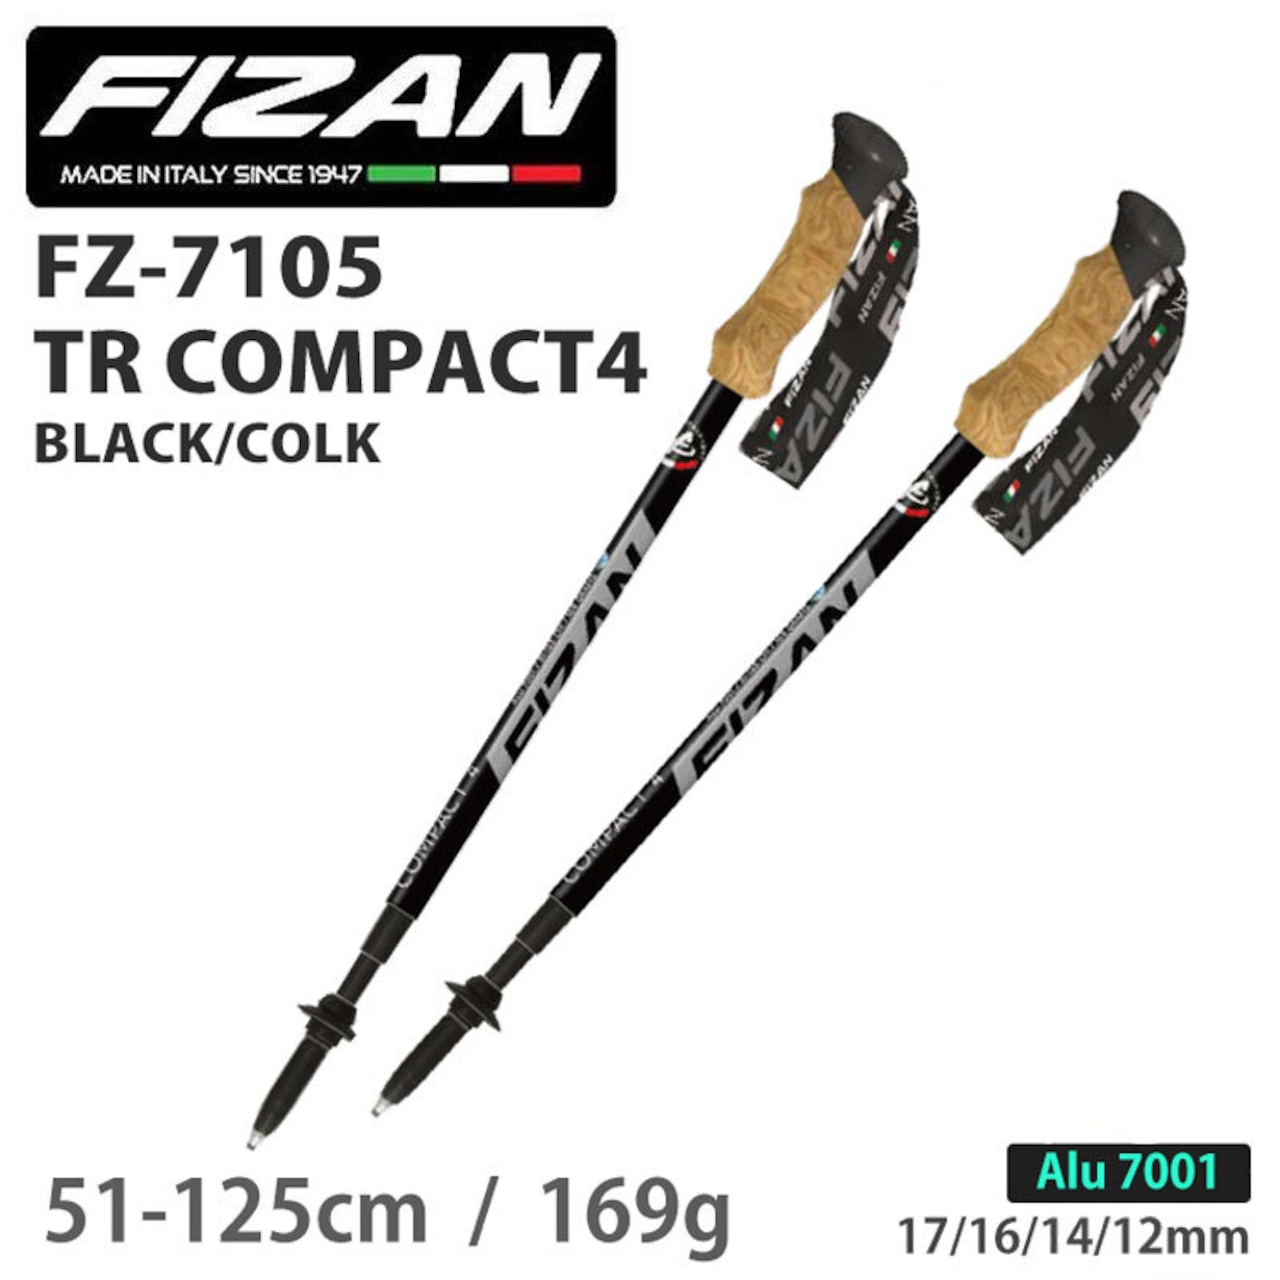 FIZAN フィザン 軽量 可変4段 トレッキングポール51-125cm TR COMPACT4 Black/COLK コンパクト4 ブラック